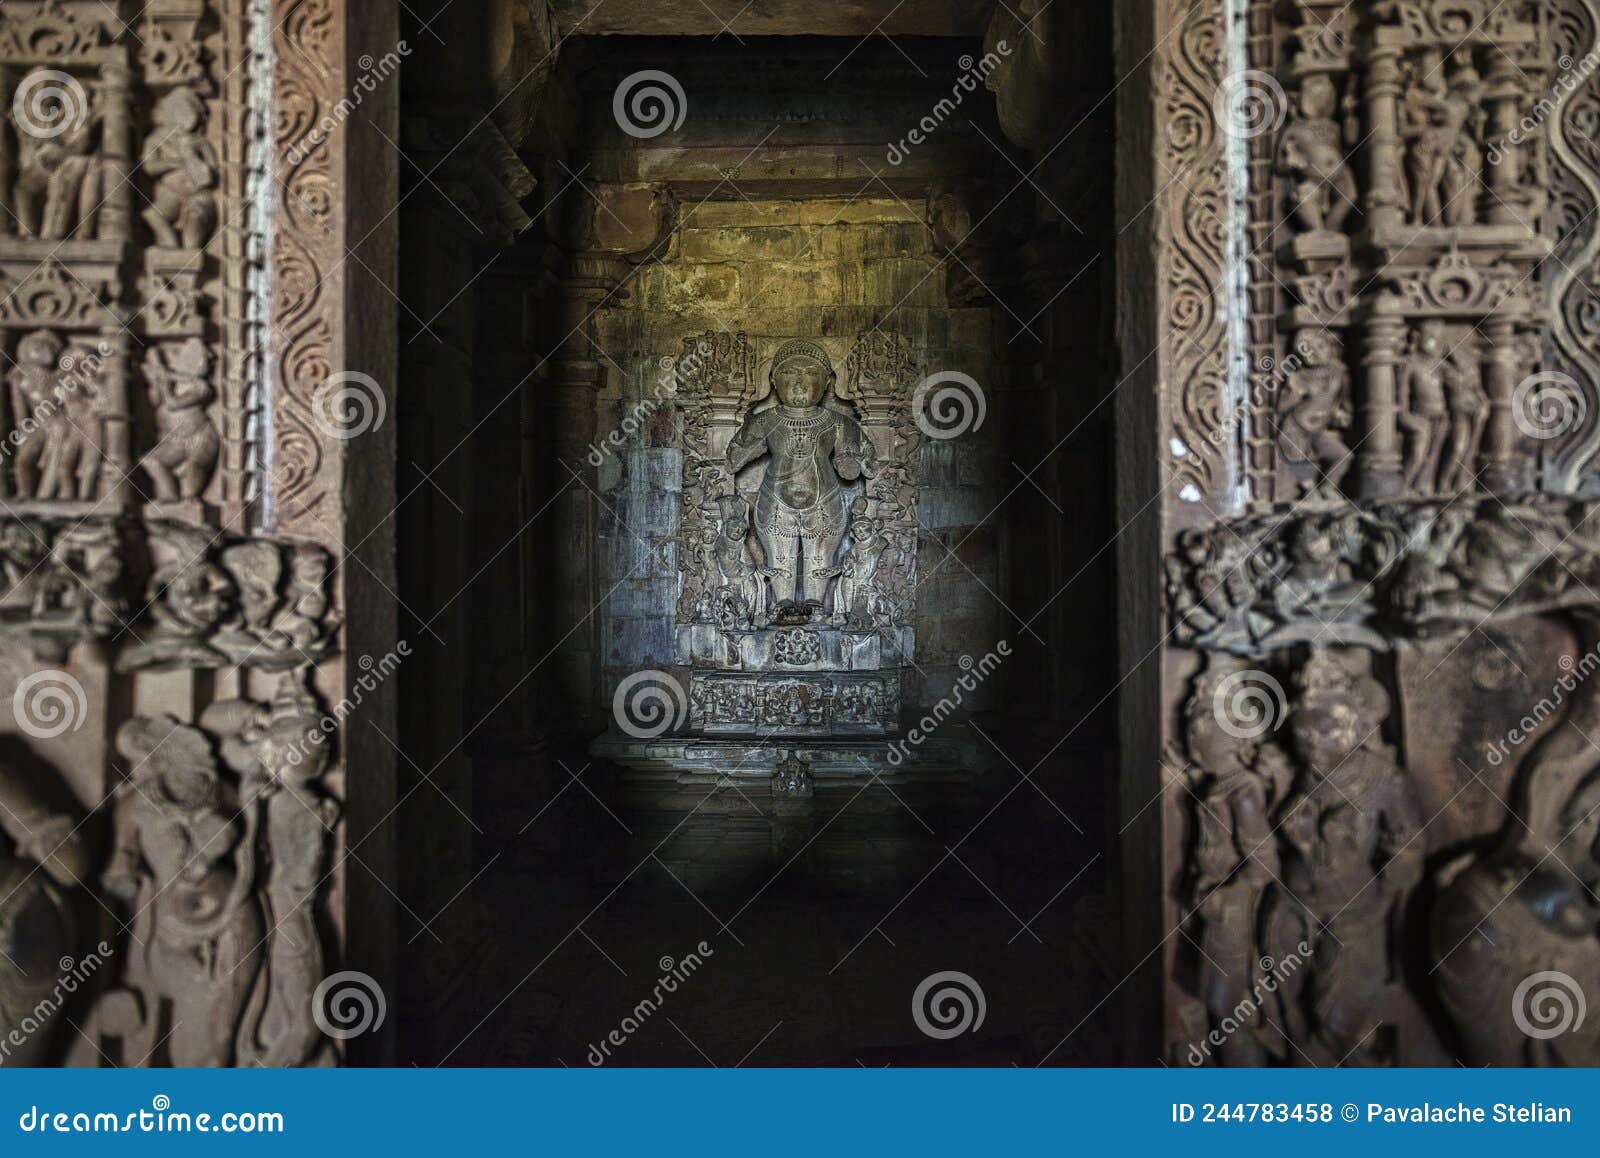 famous erotic temple in khajuraho, india